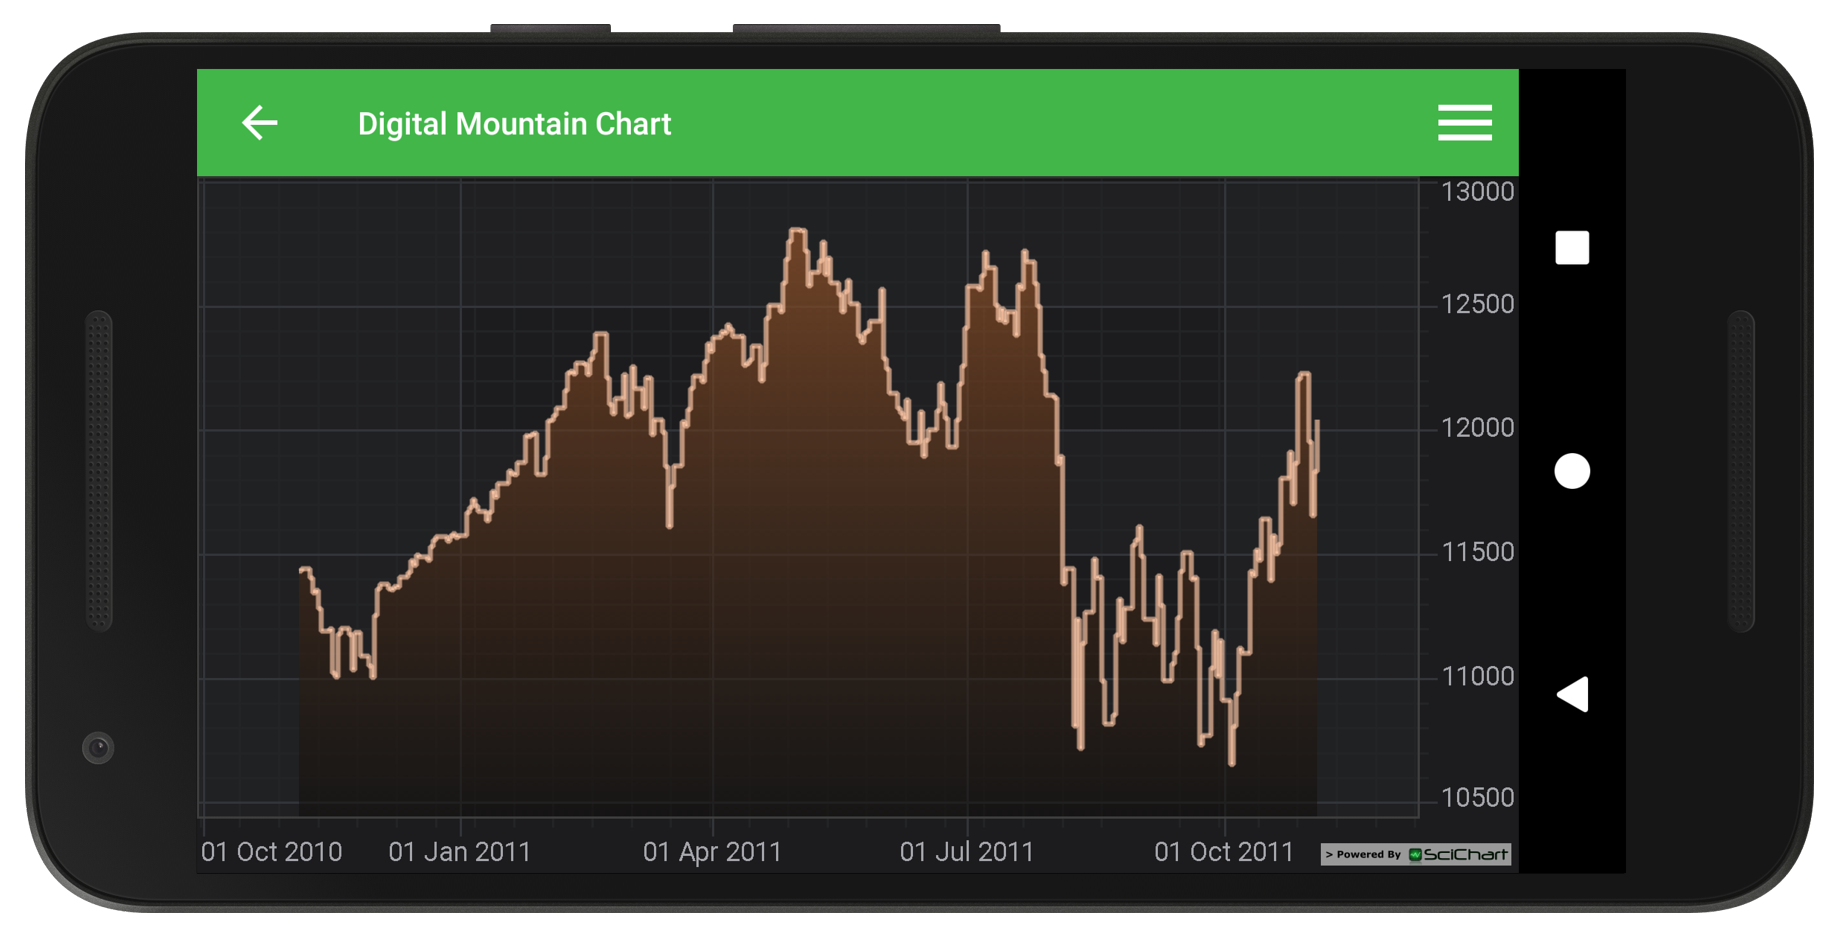 Mountain Chart